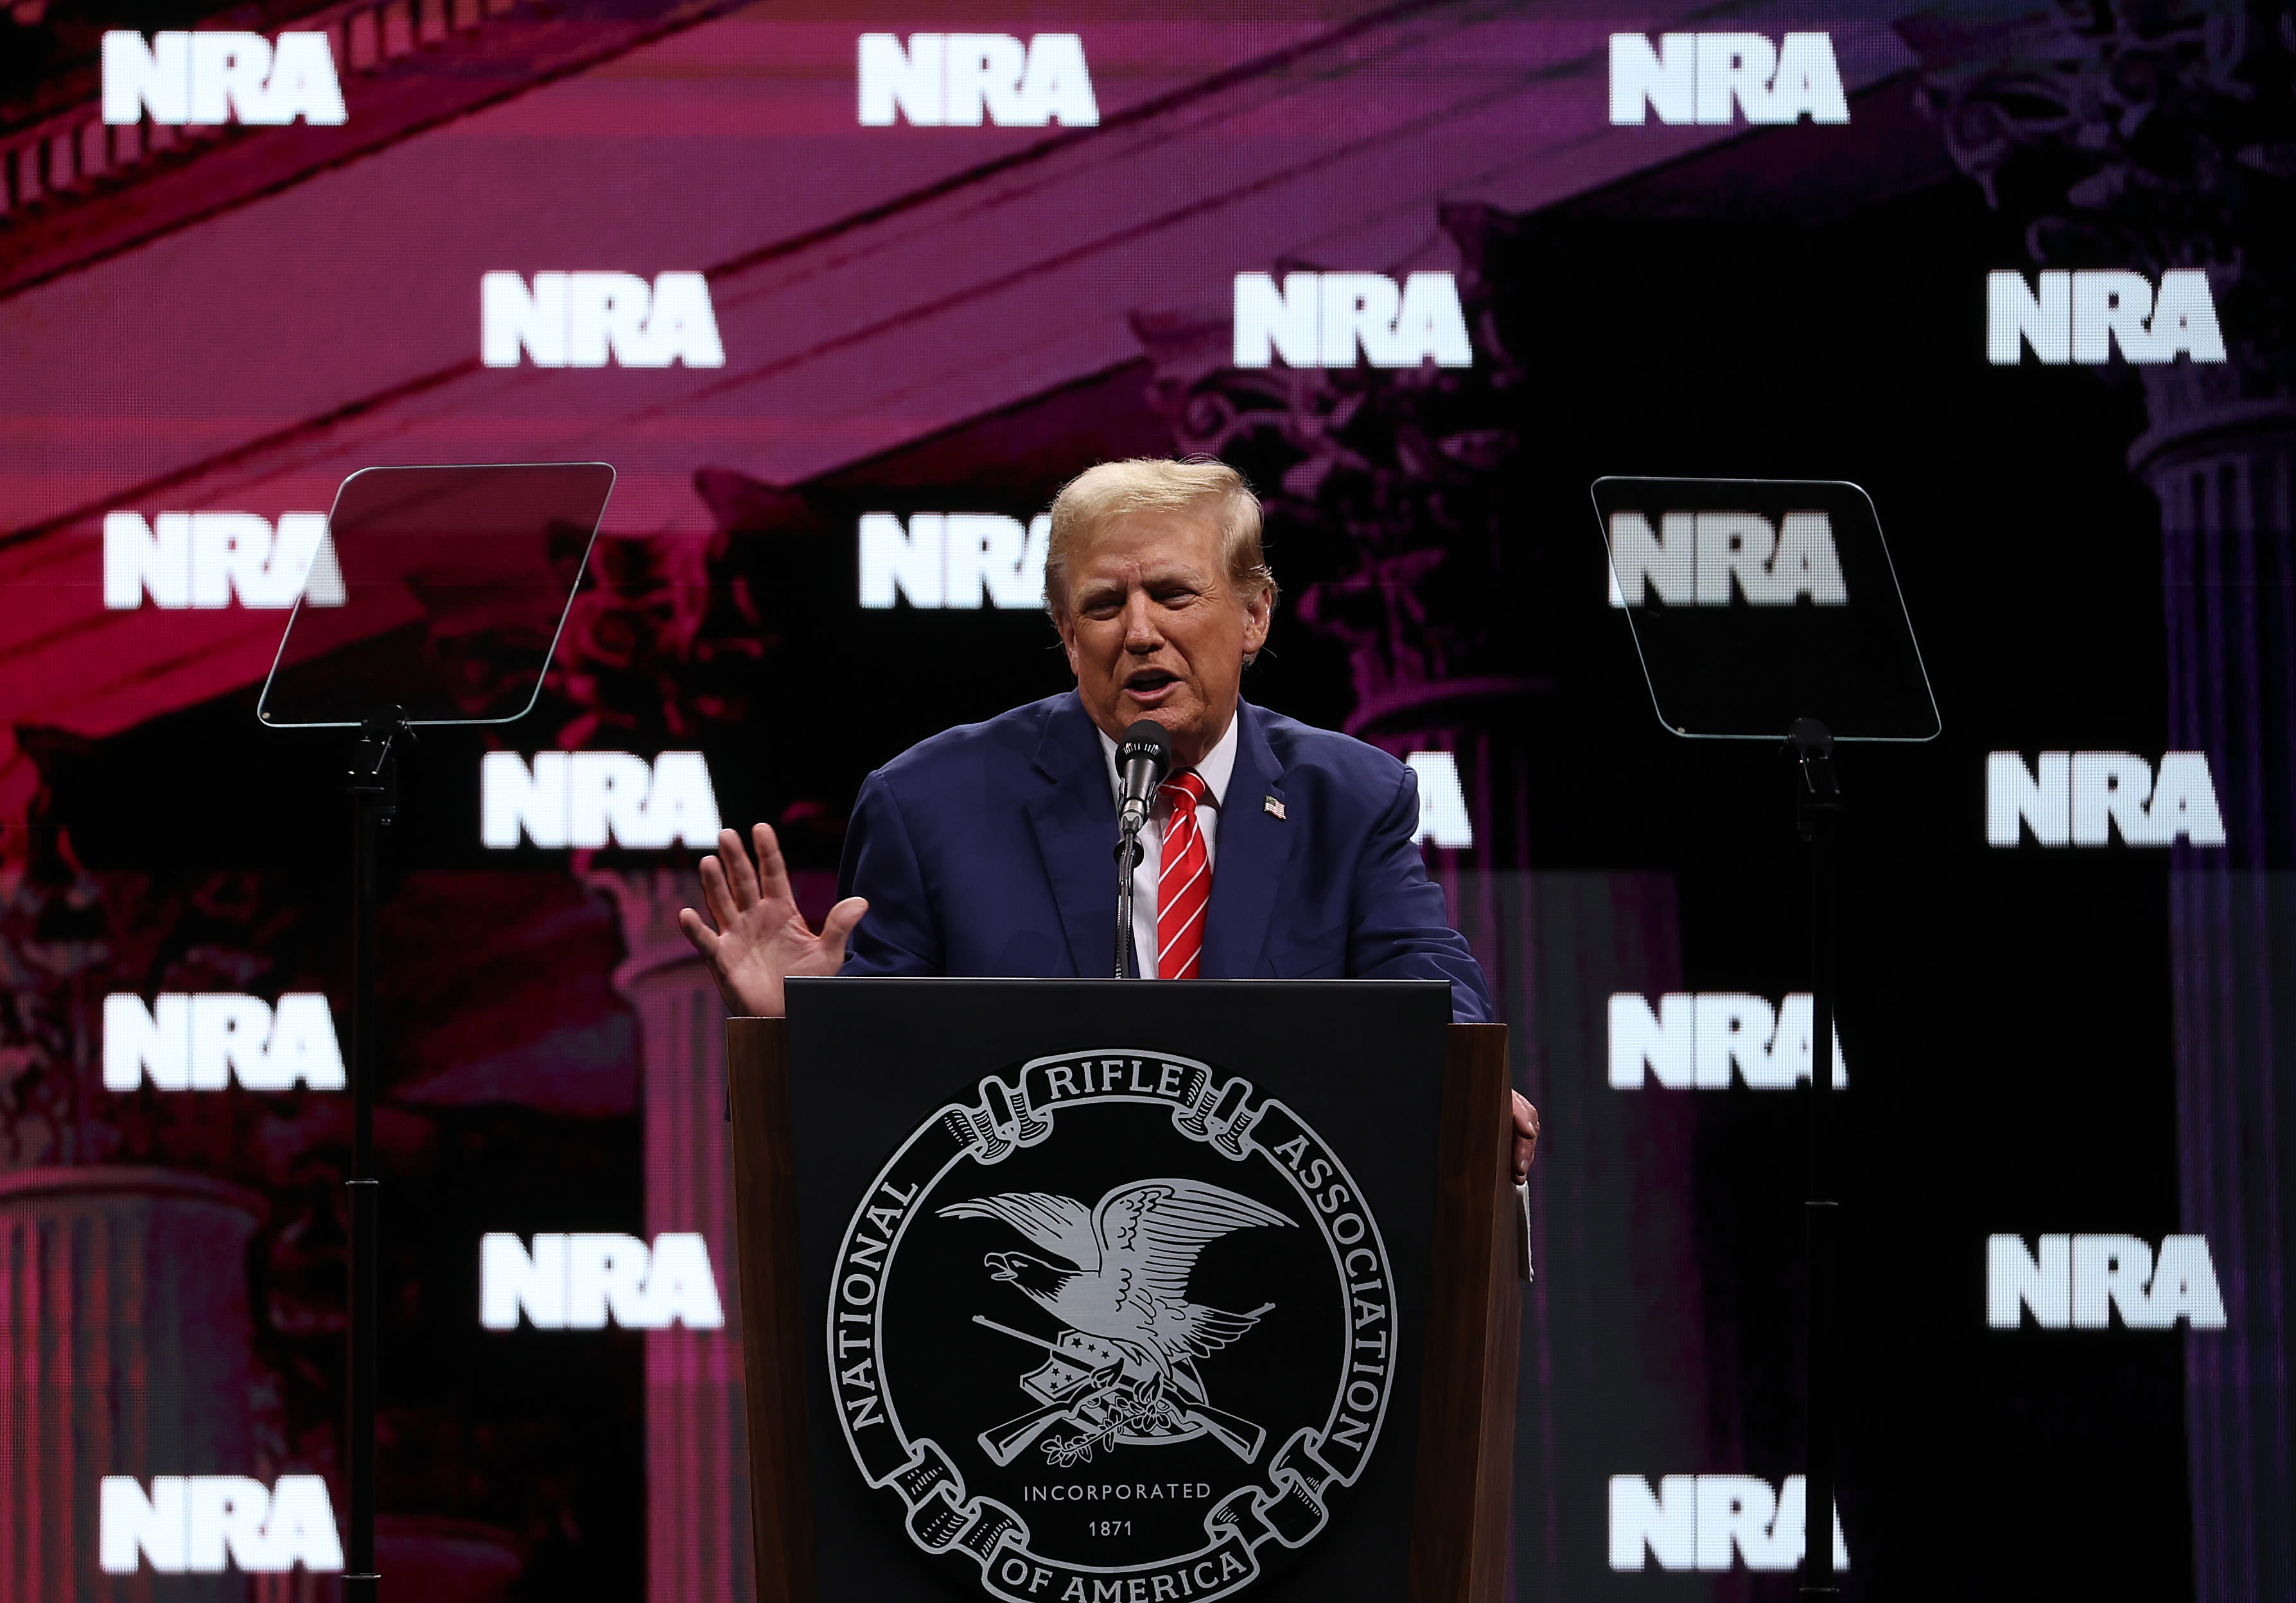 Donald Trump's "glitch" during NRA speech raises questions